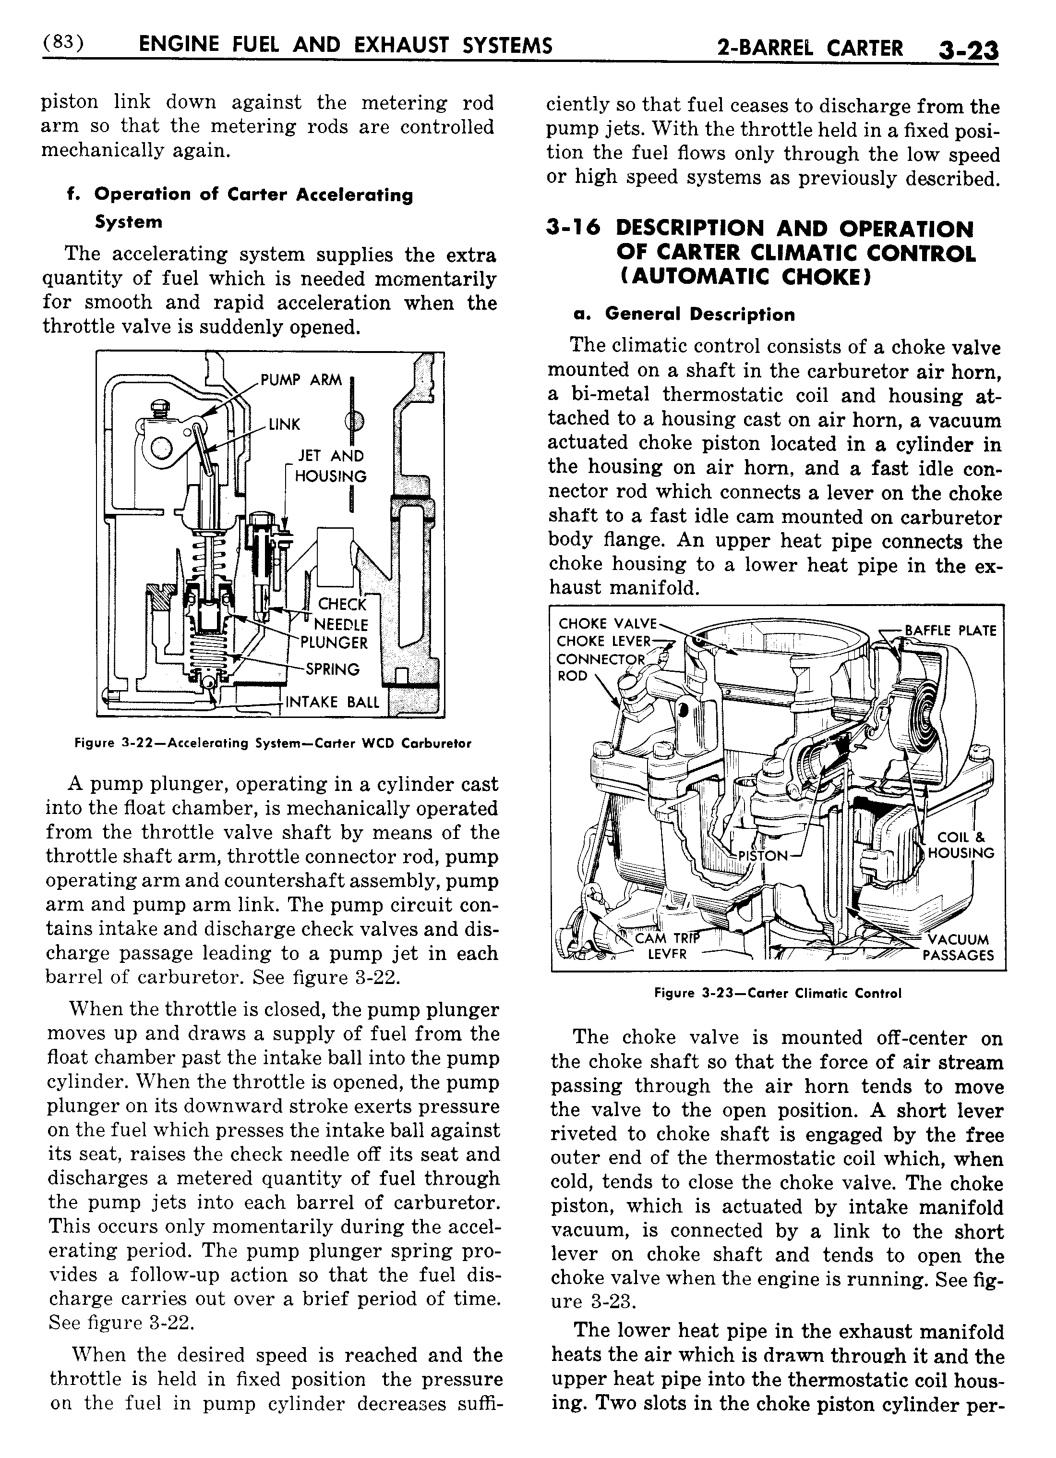 n_04 1954 Buick Shop Manual - Engine Fuel & Exhaust-023-023.jpg